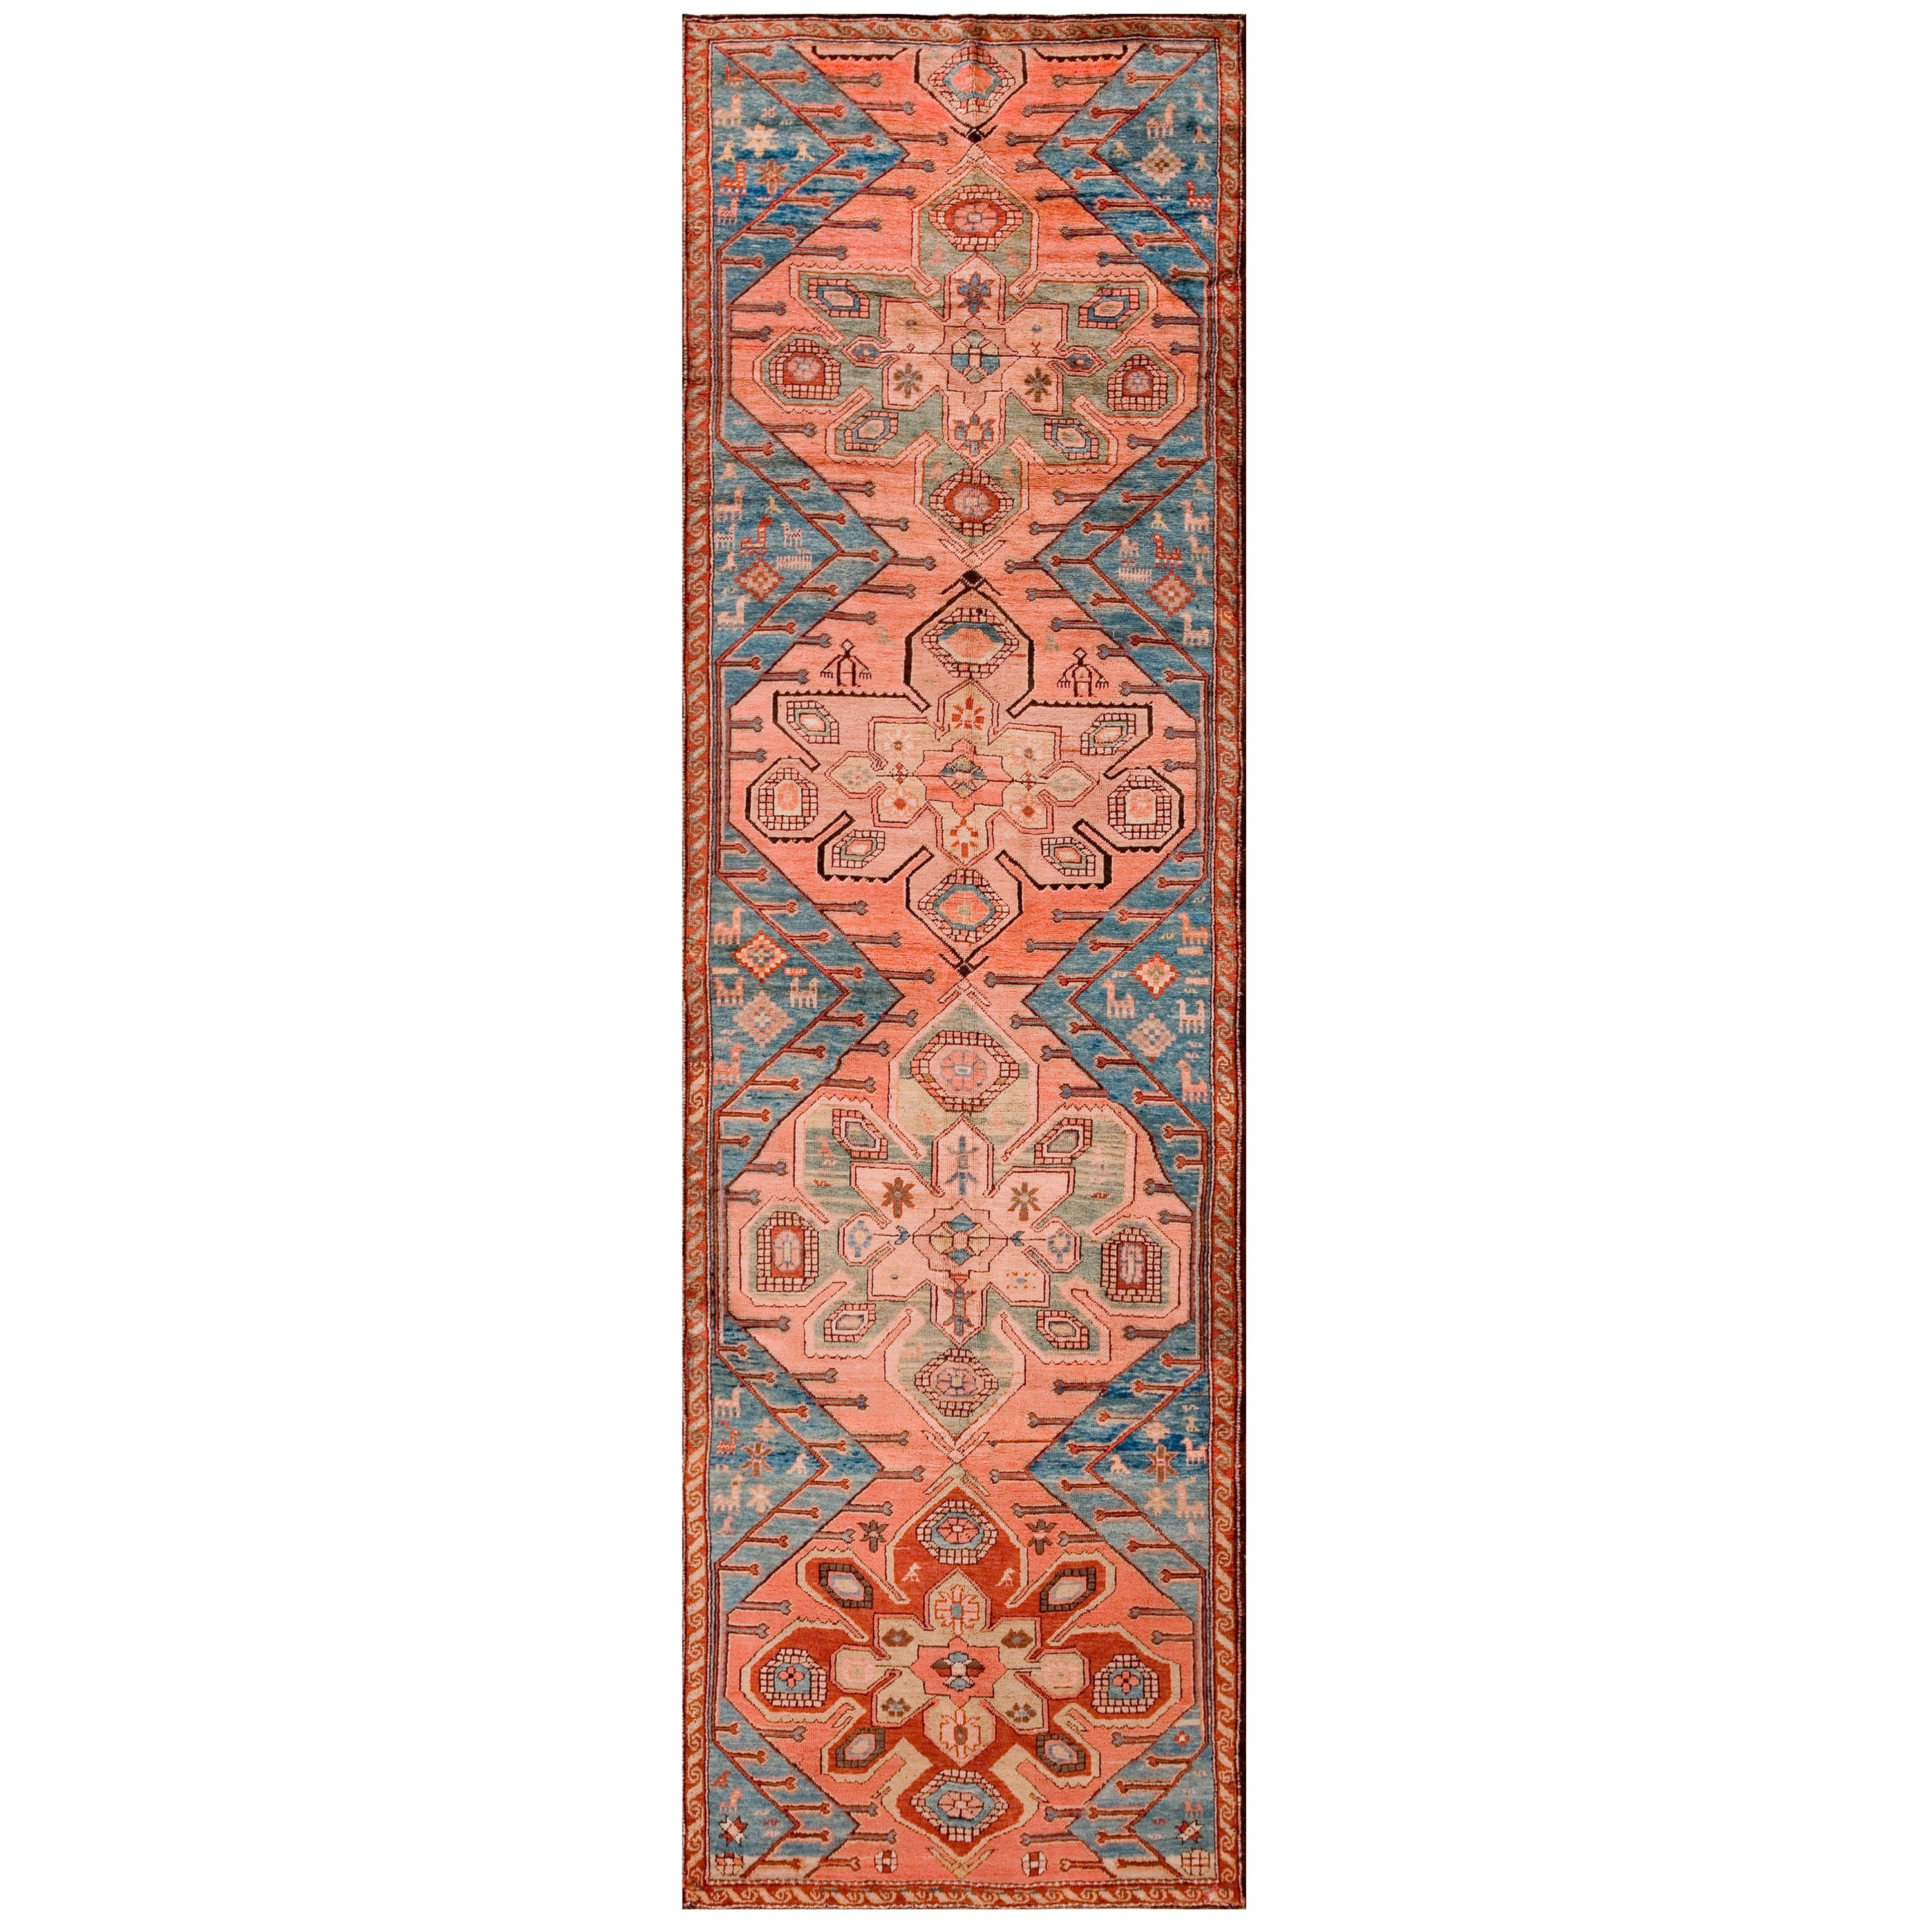 Early 20th Century Caucasian Karabagh Carpet ( 3'9" x 12'3" - 114 x 373 cm )